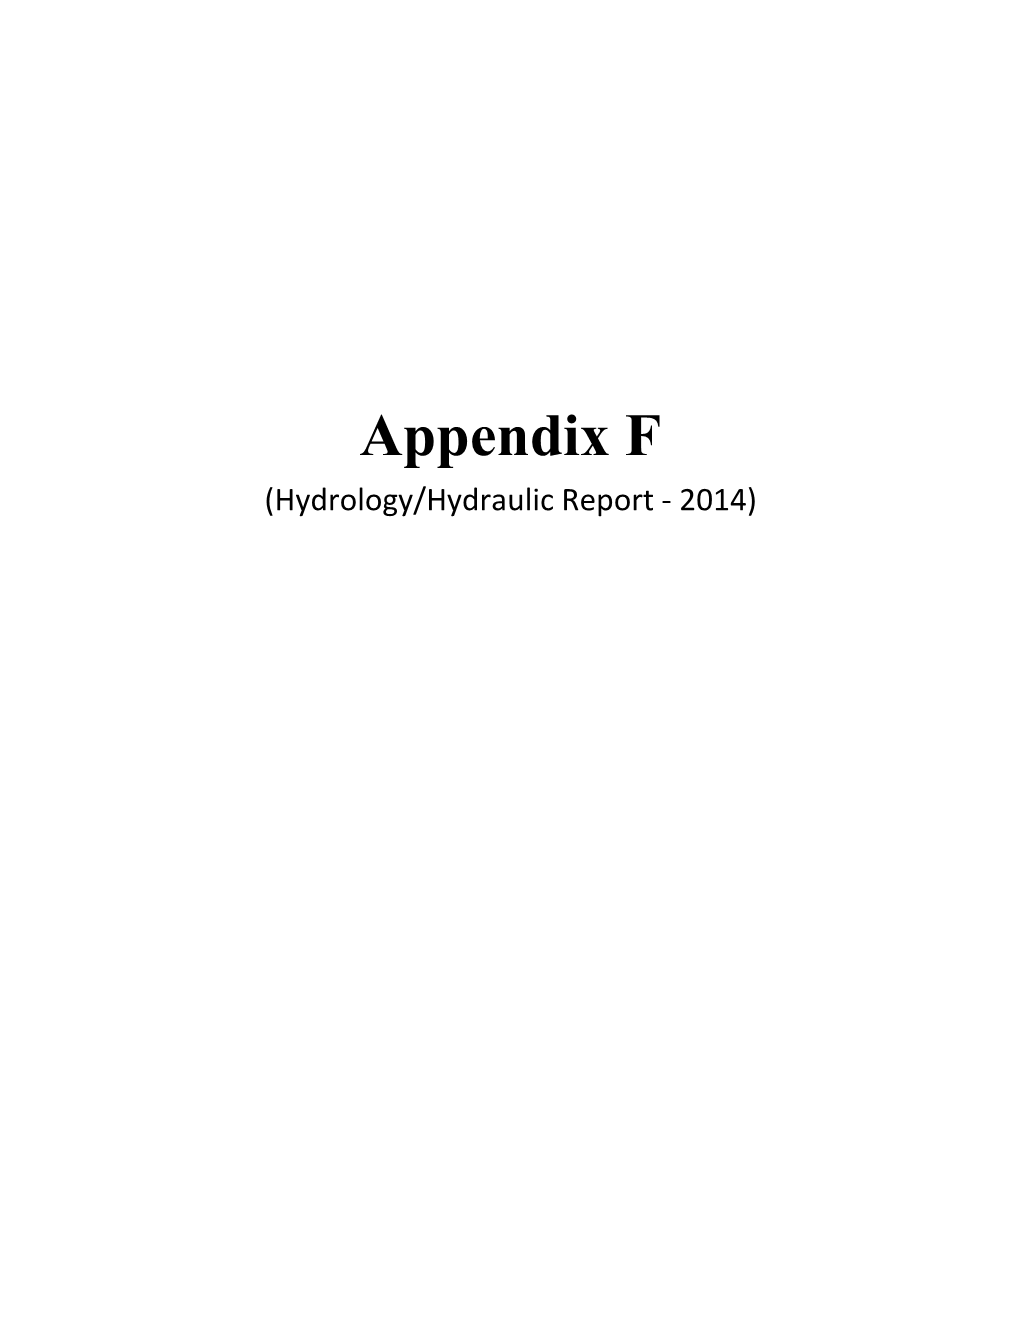 Appendix F (Hydrology/Hydraulic Report - 2014)